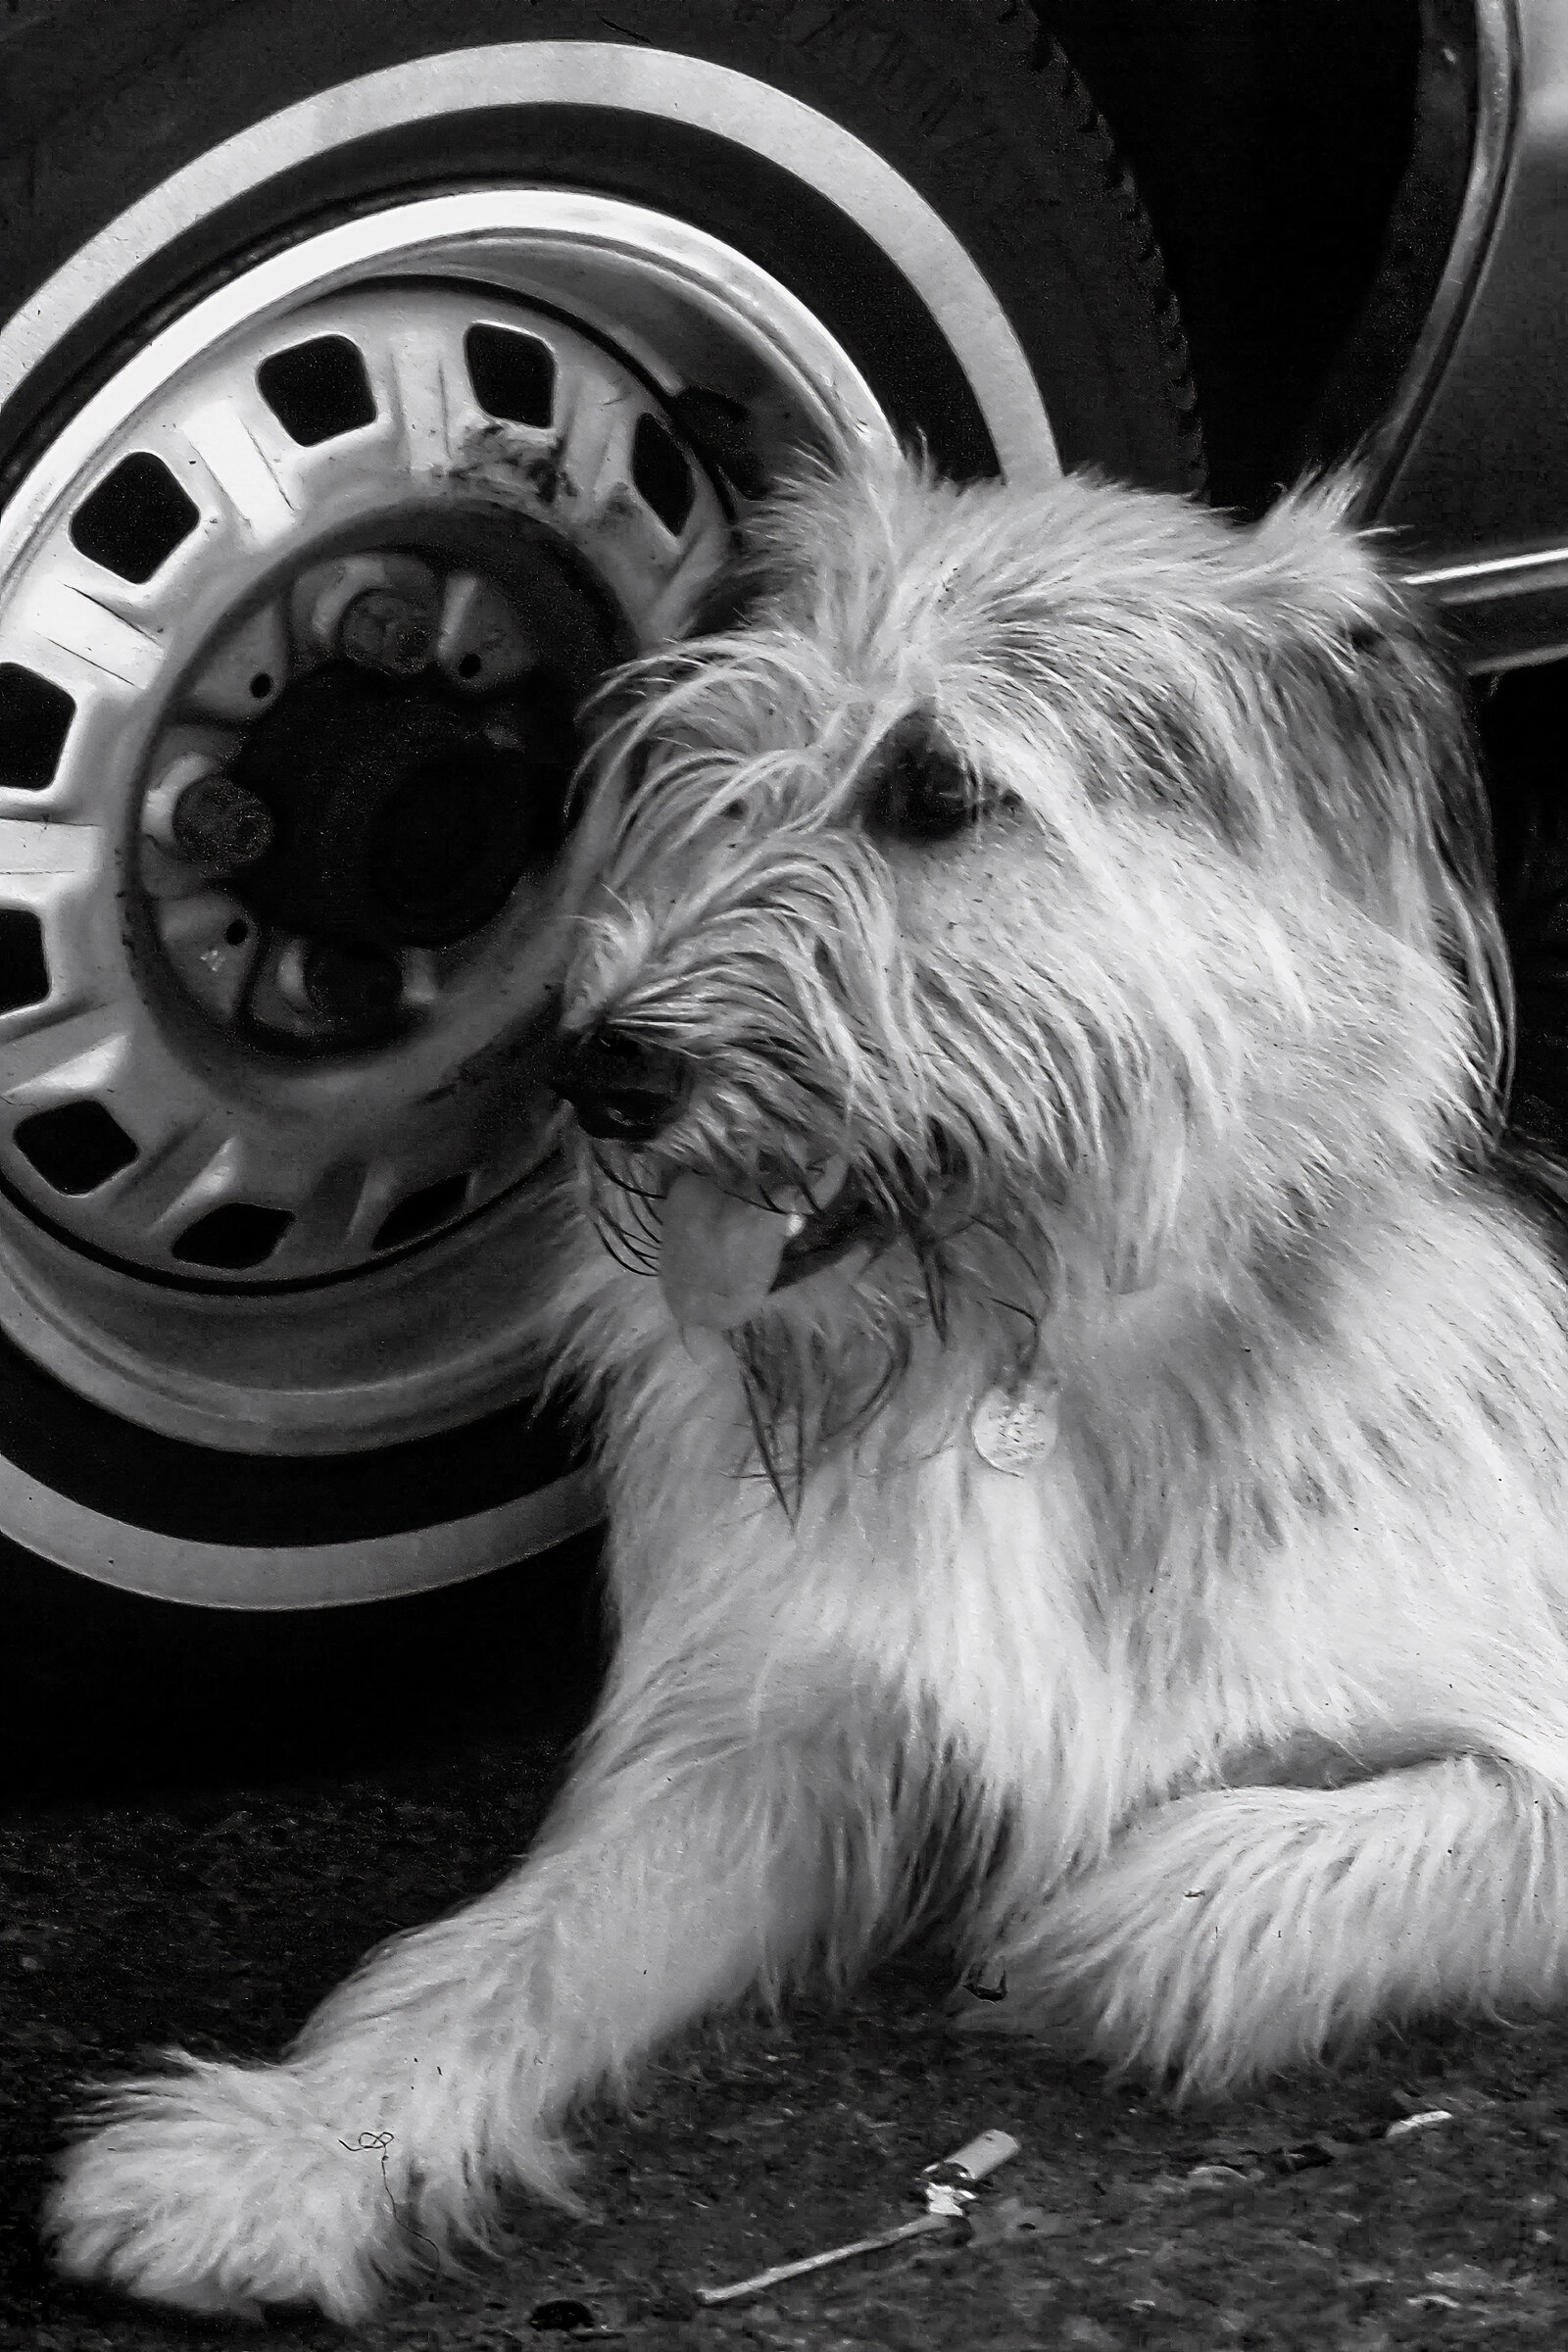 Dog & Tire